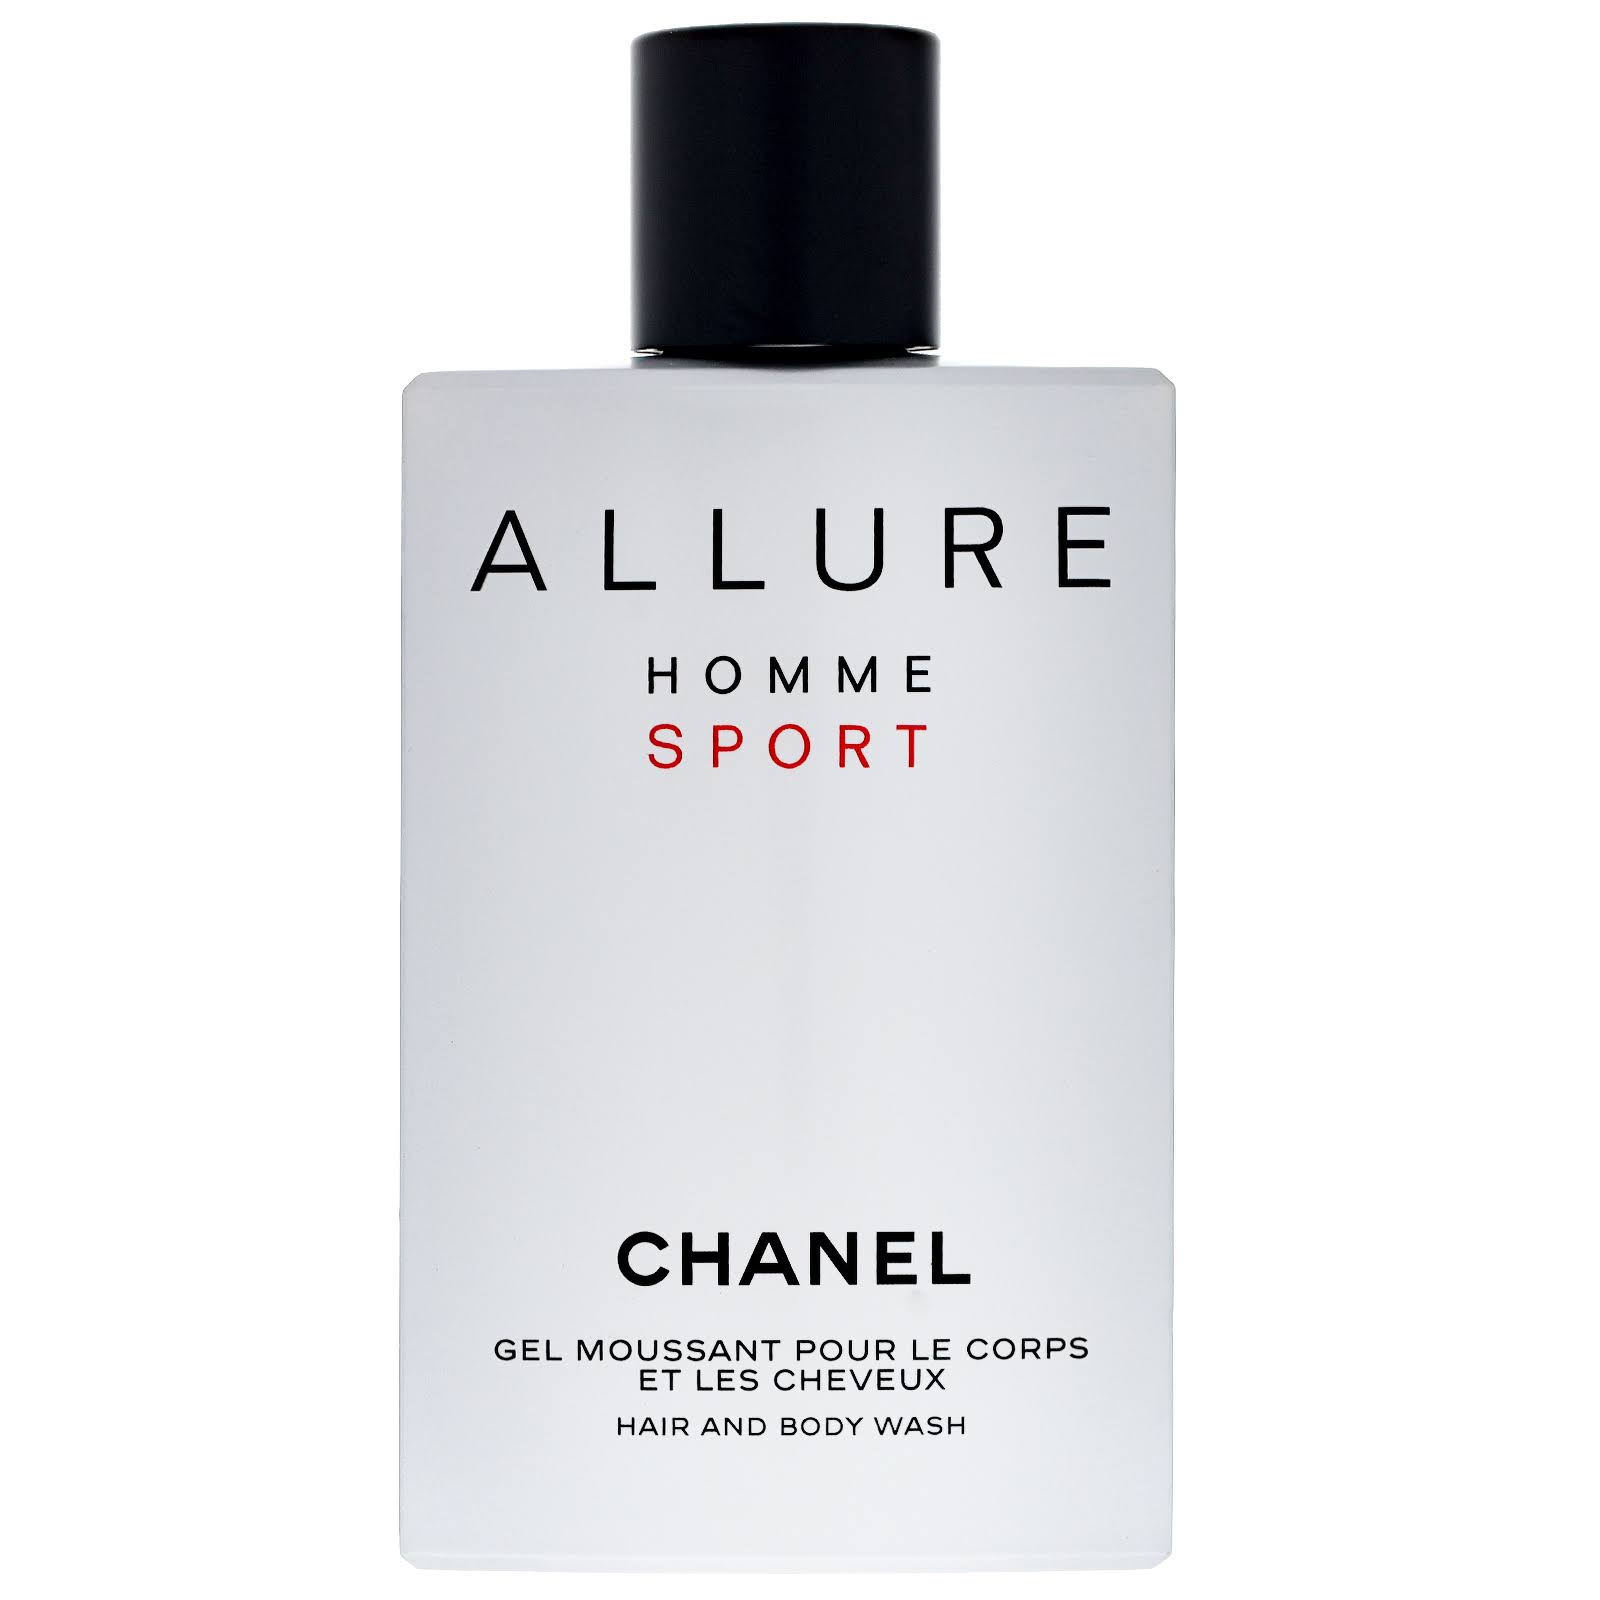 Chanel Allure Homme Sport Hair & Body Wash - 200ml